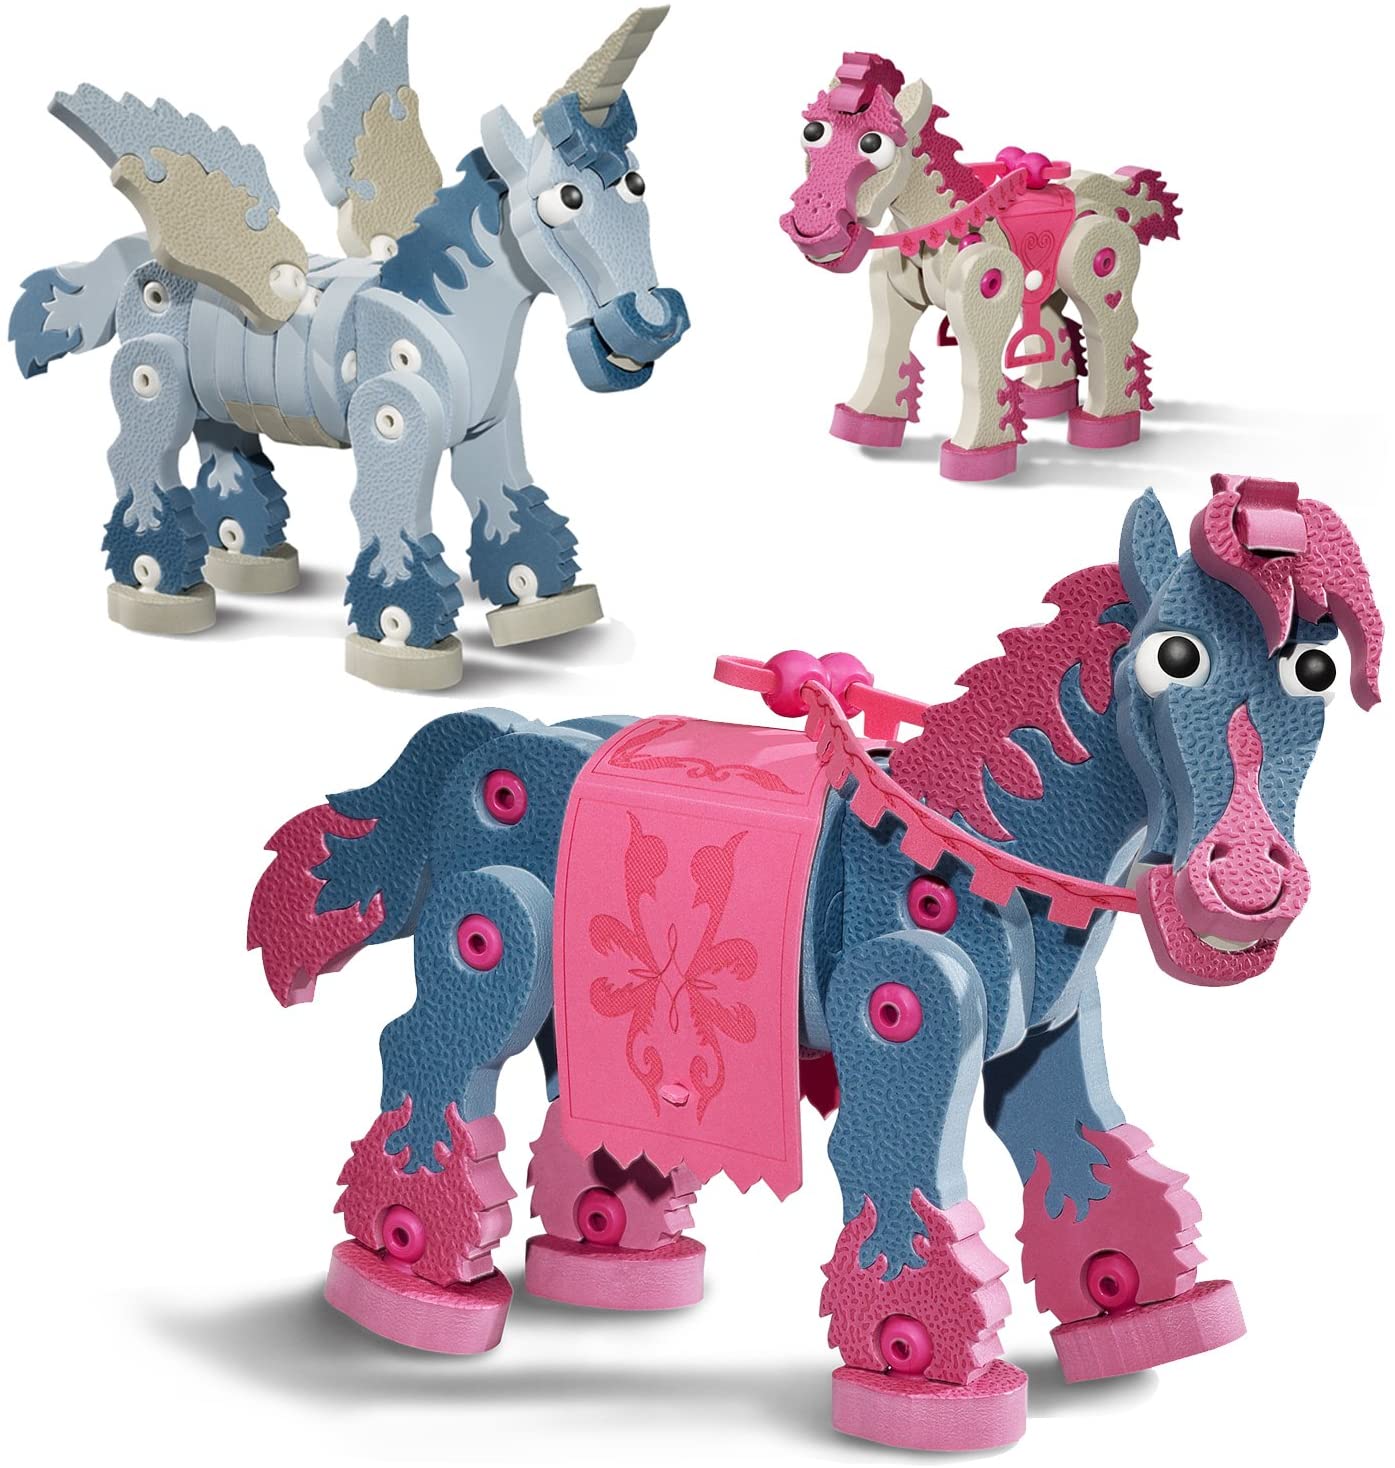 Bloco Toys Horses and Unicorns BC-25006 